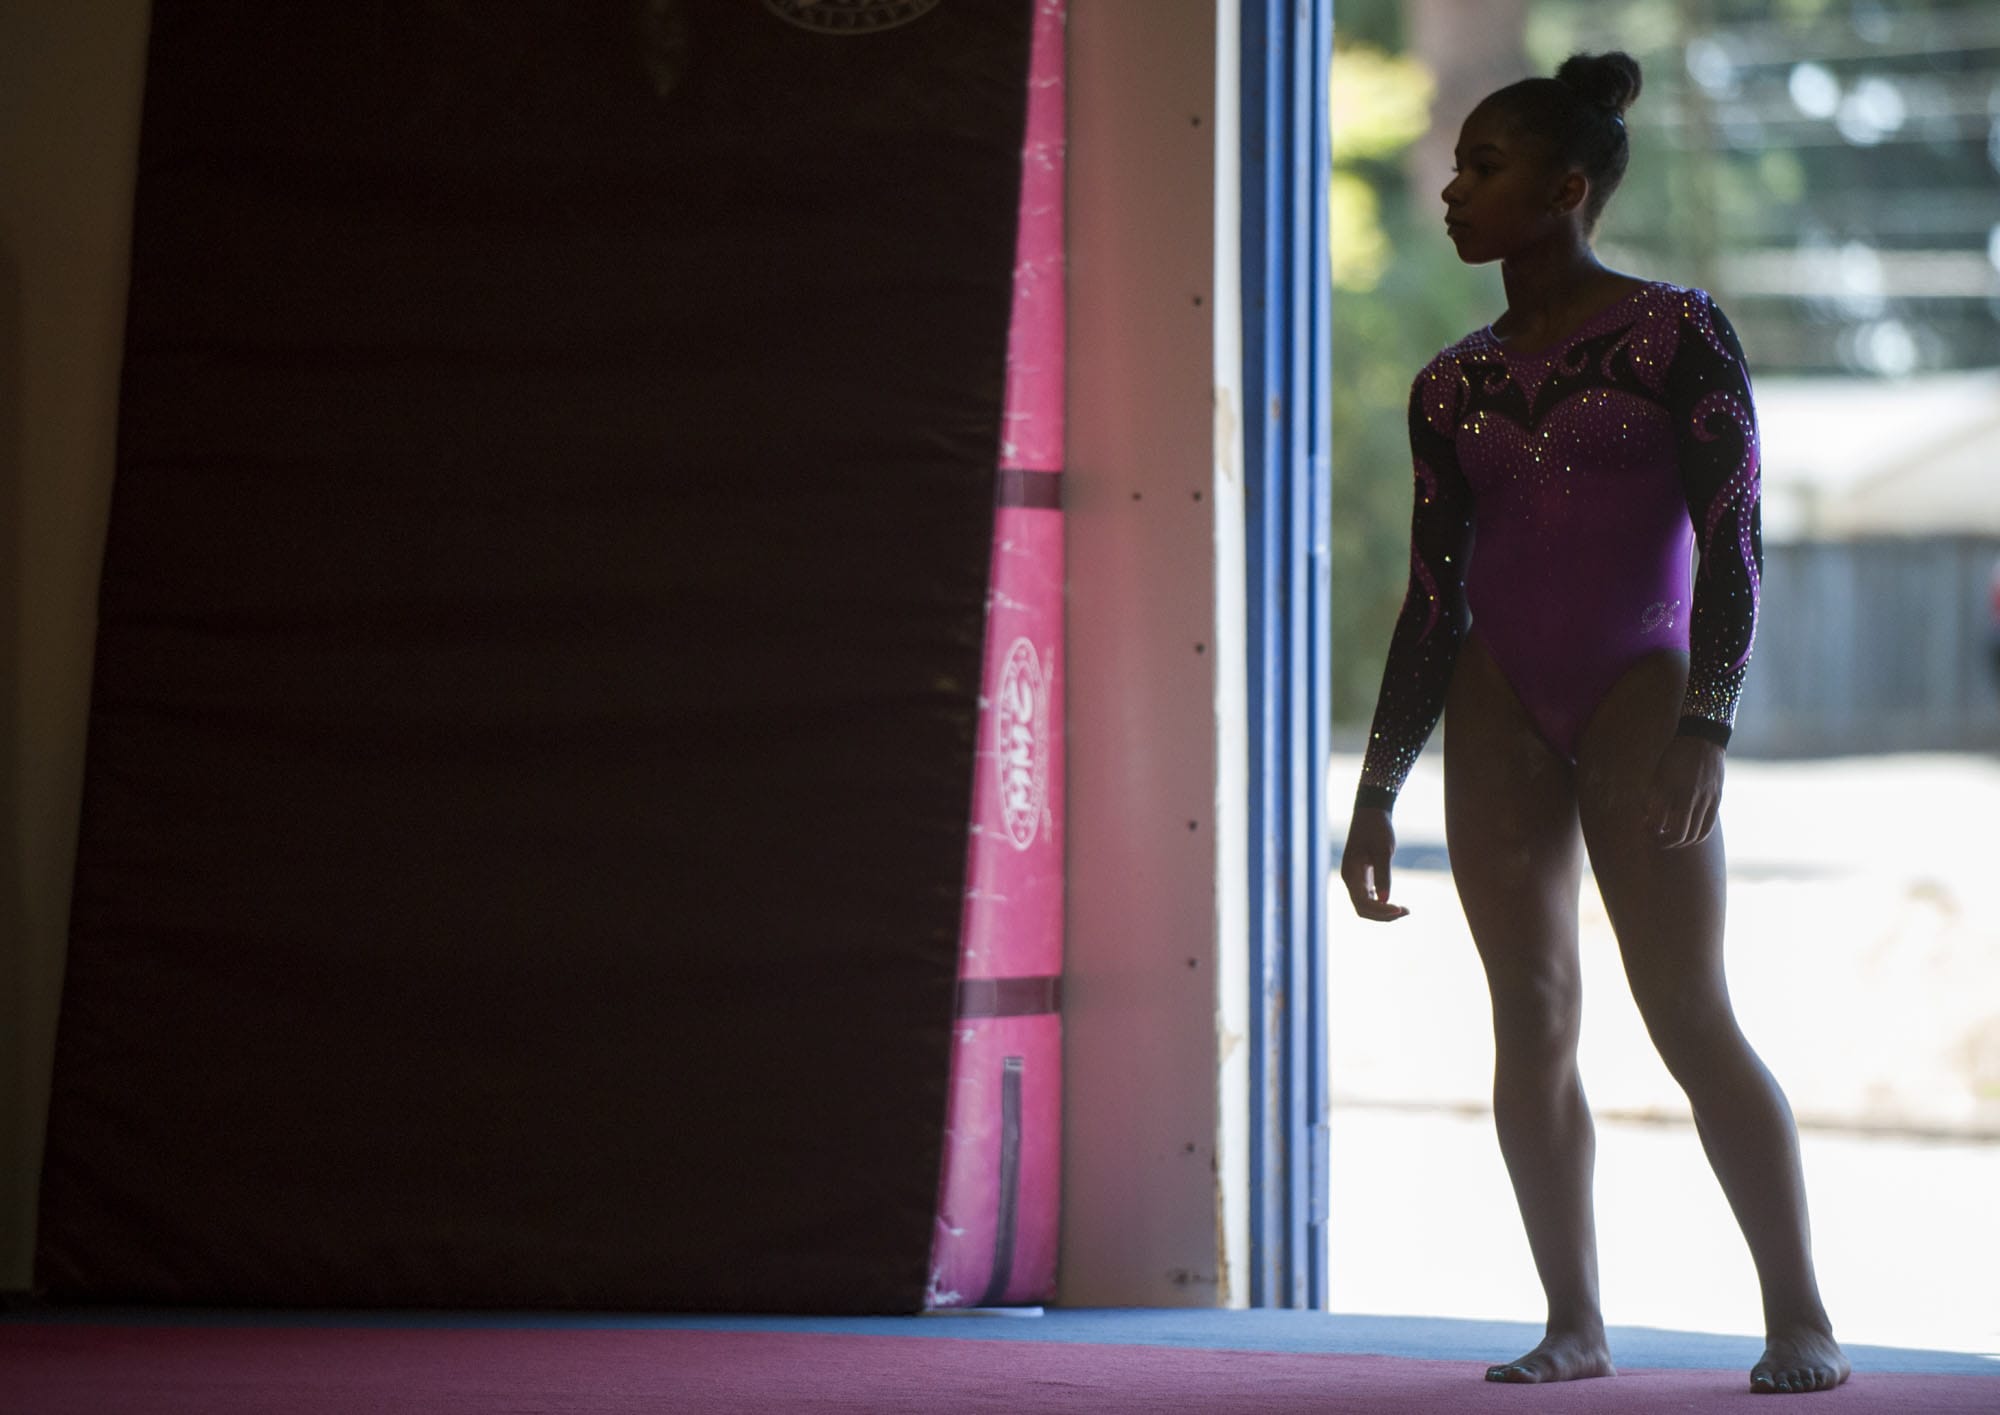 Gymnast Jordan Chiles trains at Naydenov Gymnastics in Vancouver Tuesday August 25, 2015.